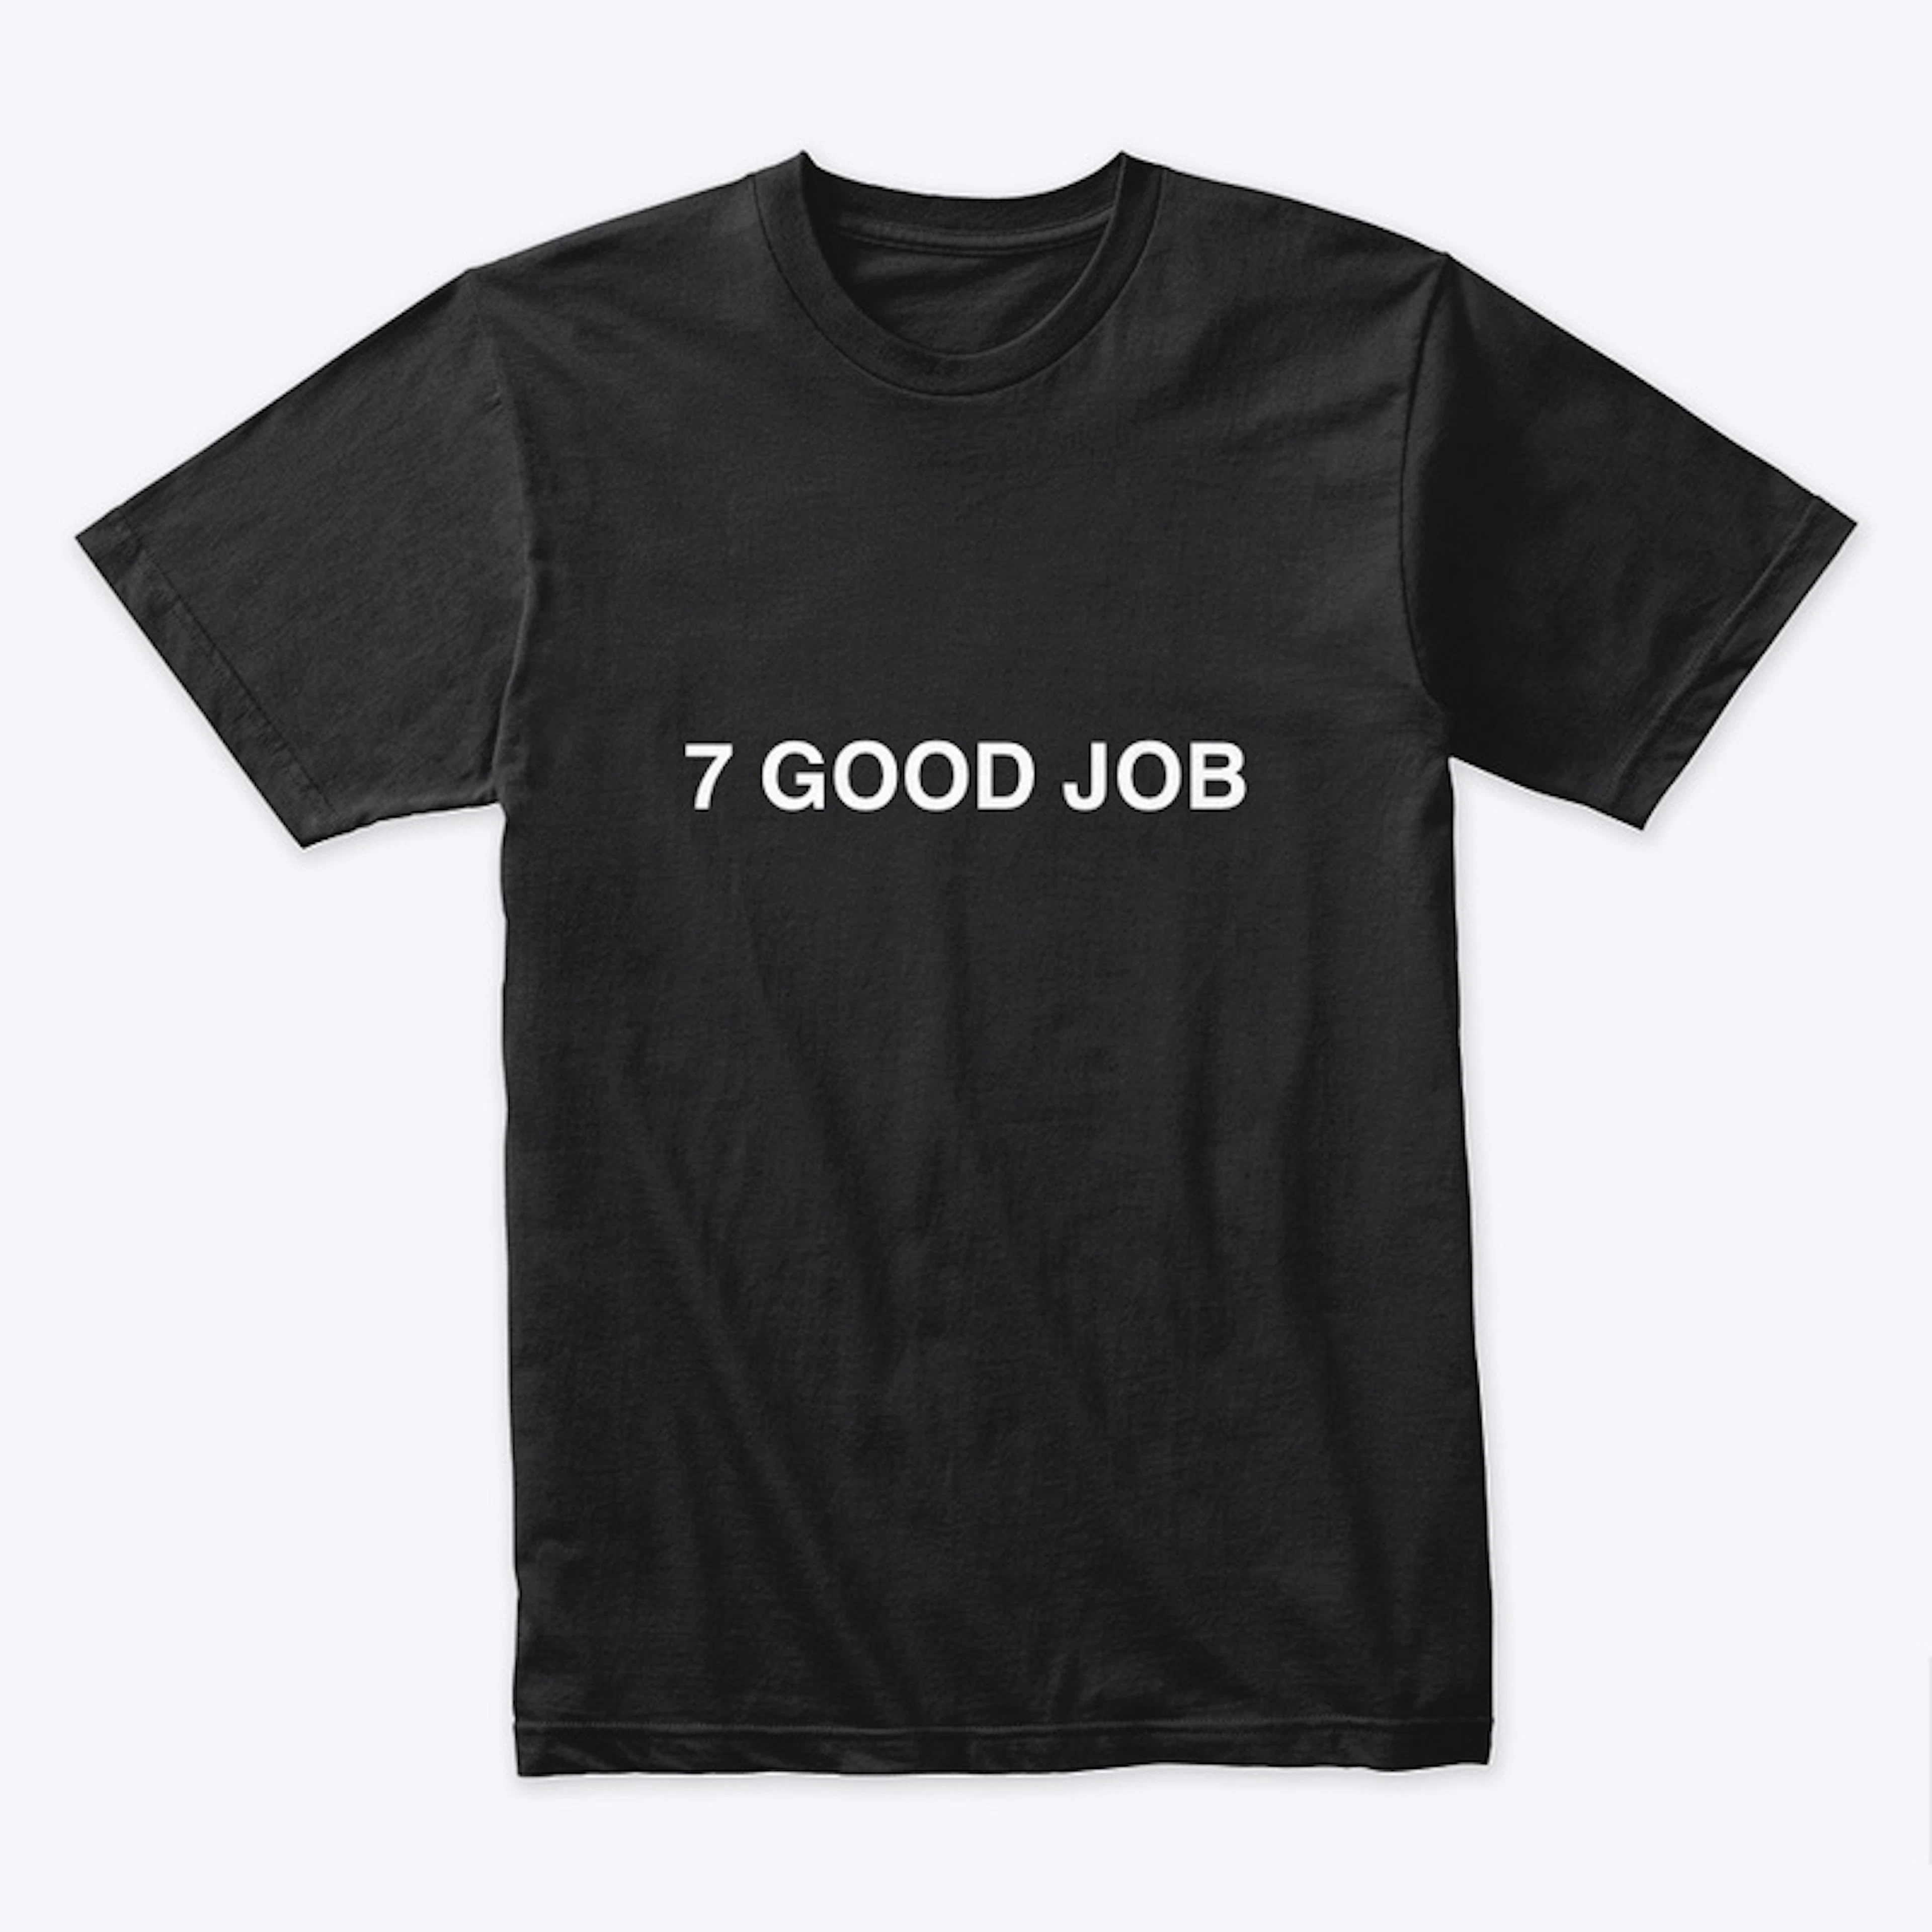  7 GOOD JOB